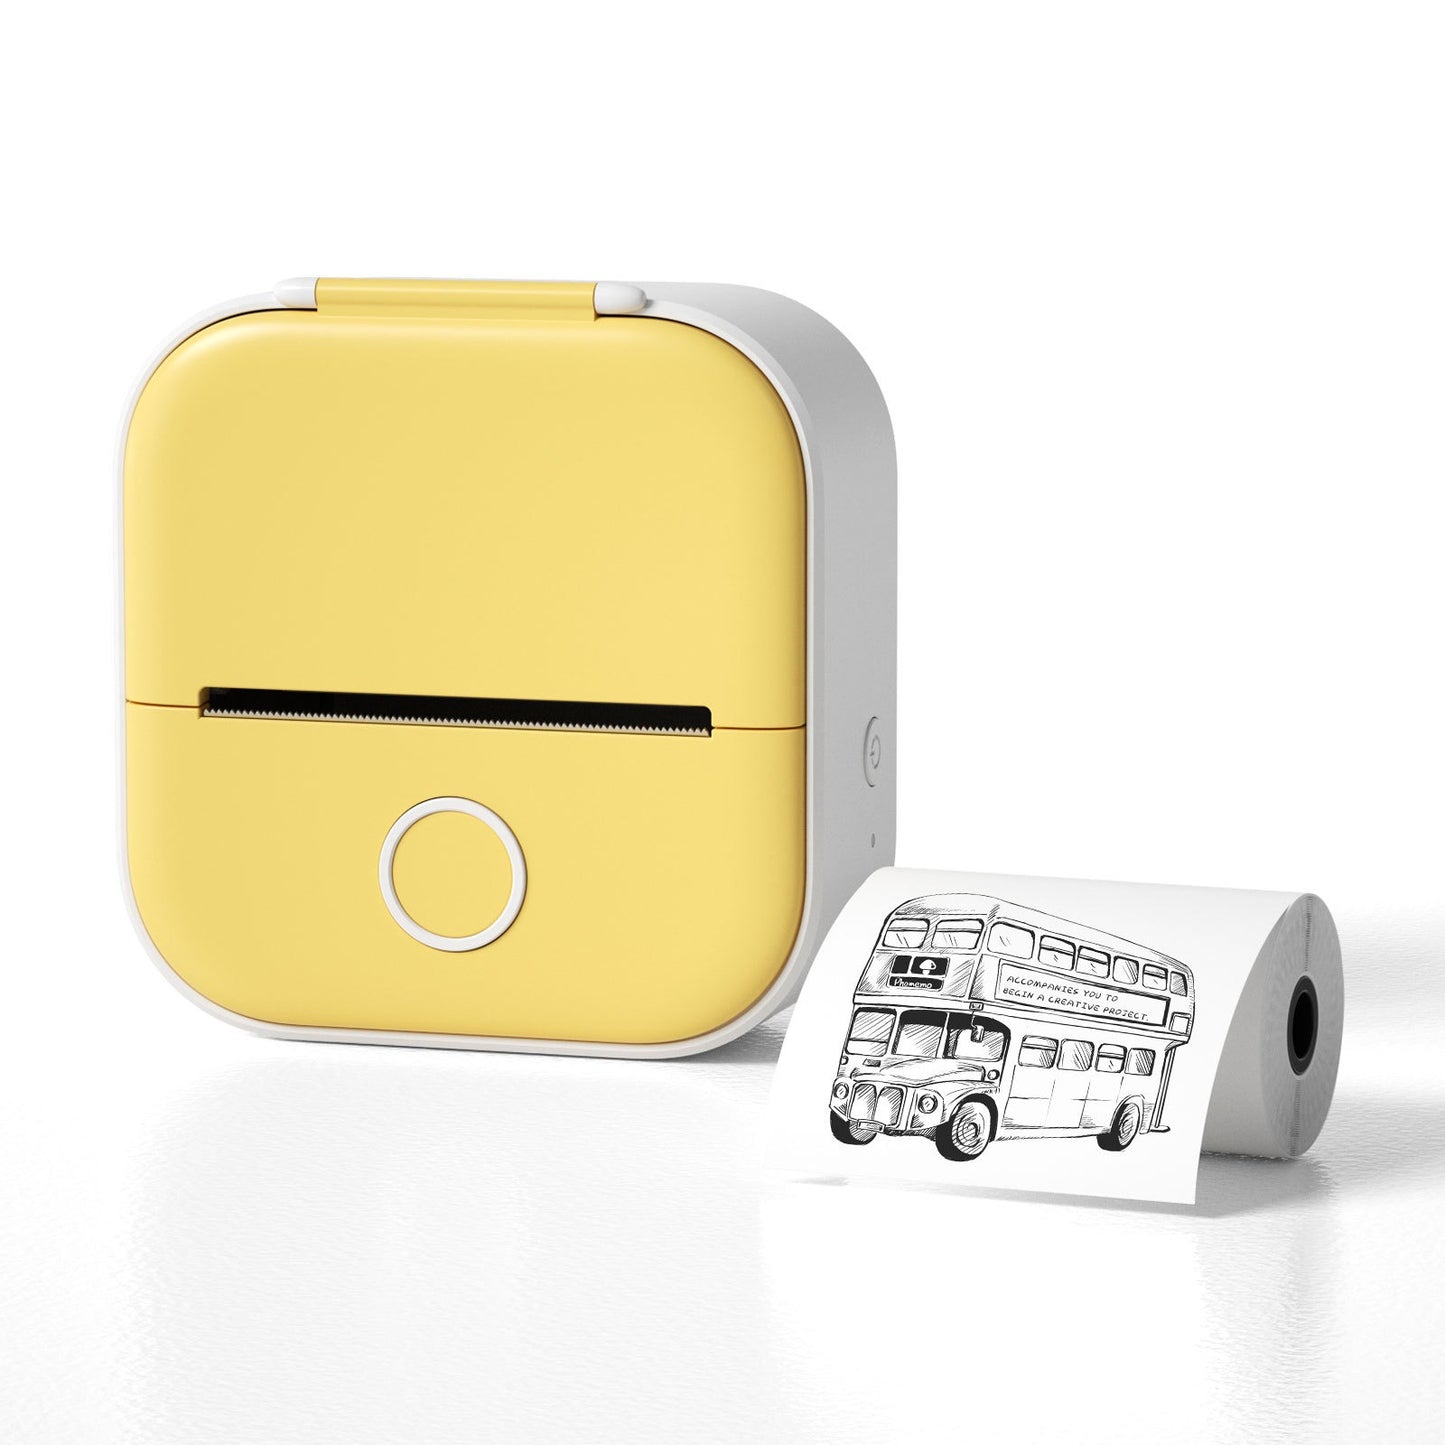 Portable Mini Bluetooth Printer